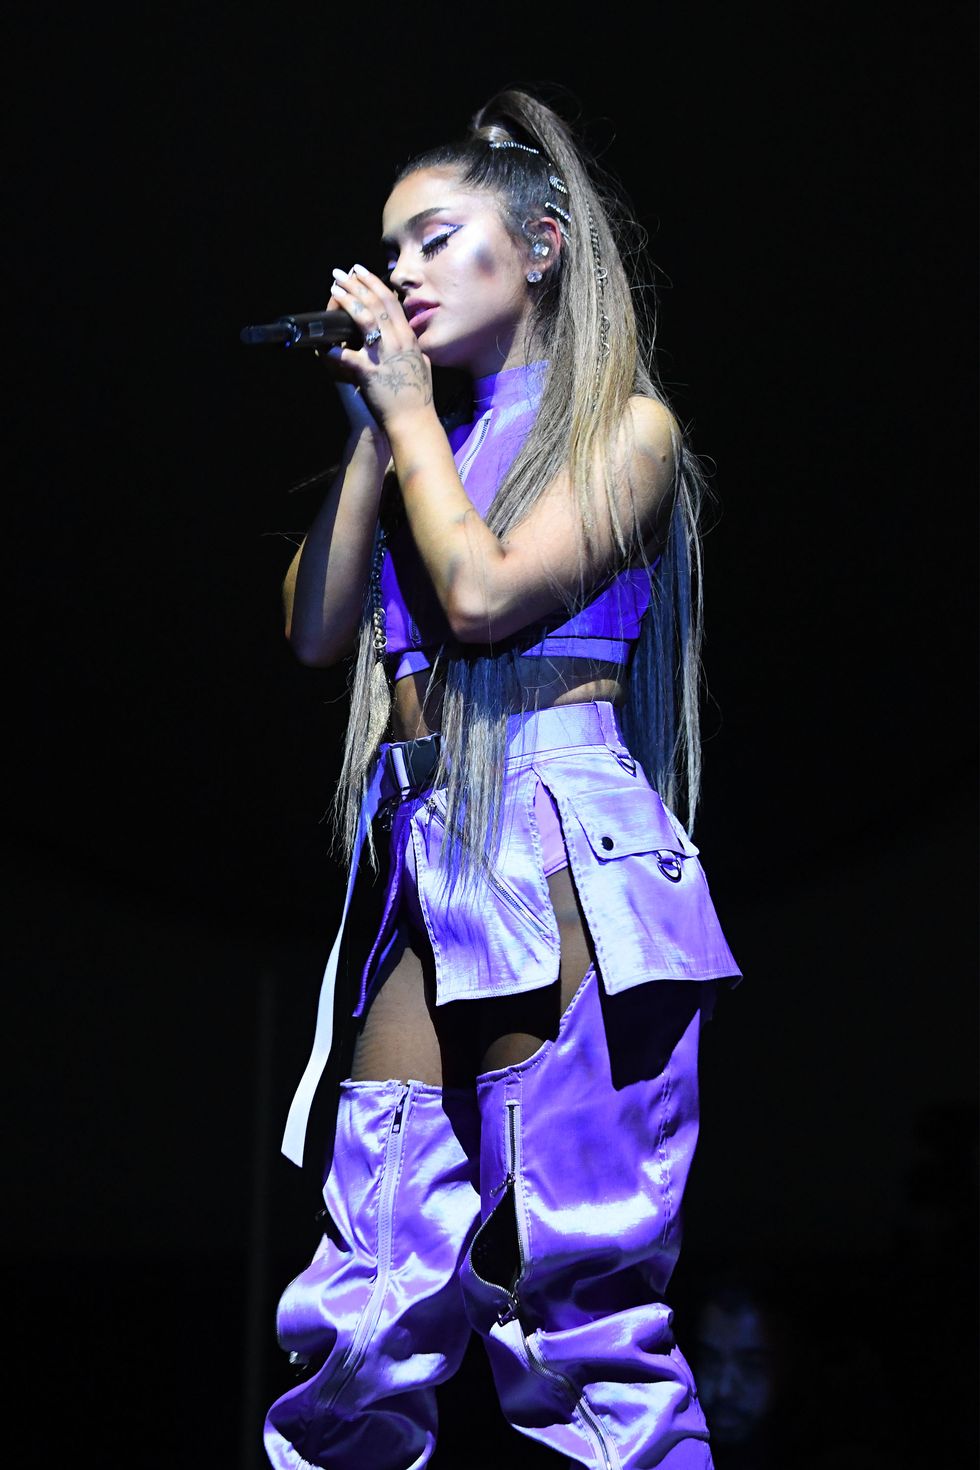 Leed's - When Ariana Grande's Sweetener Tour, the biggest music